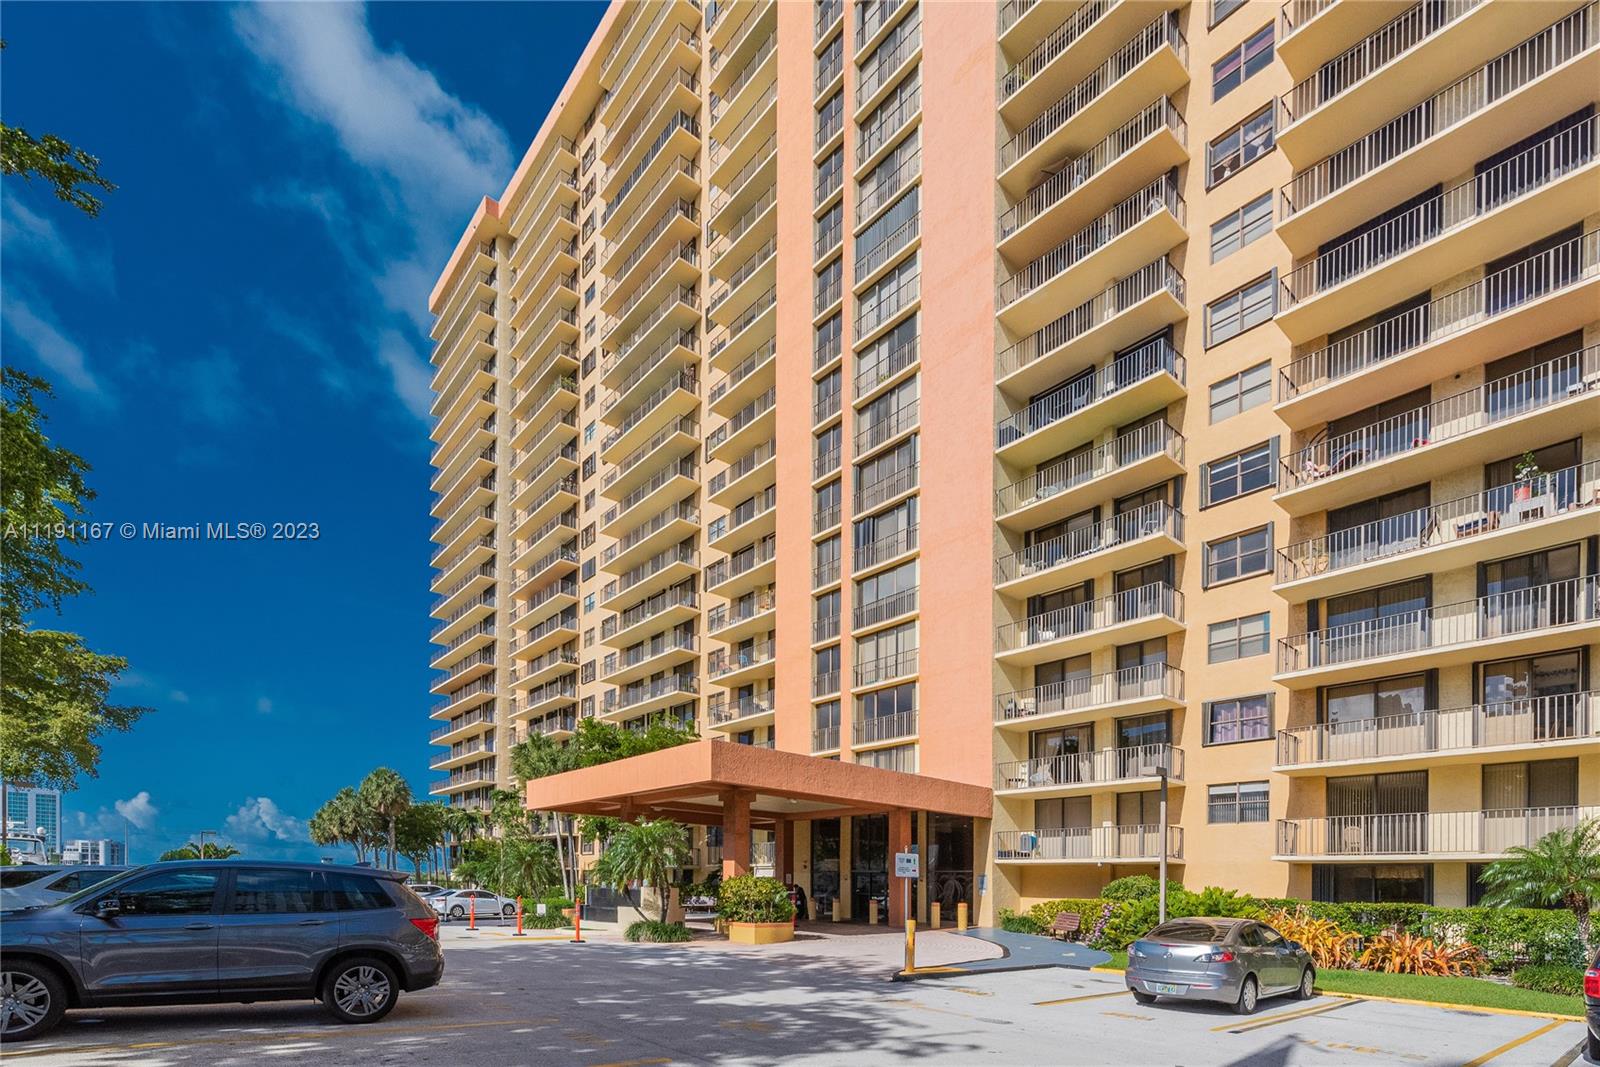 Rental Property at 290 174th St 1008, Sunny Isles Beach, Miami-Dade County, Florida - Bedrooms: 2 
Bathrooms: 2  - $3,900 MO.